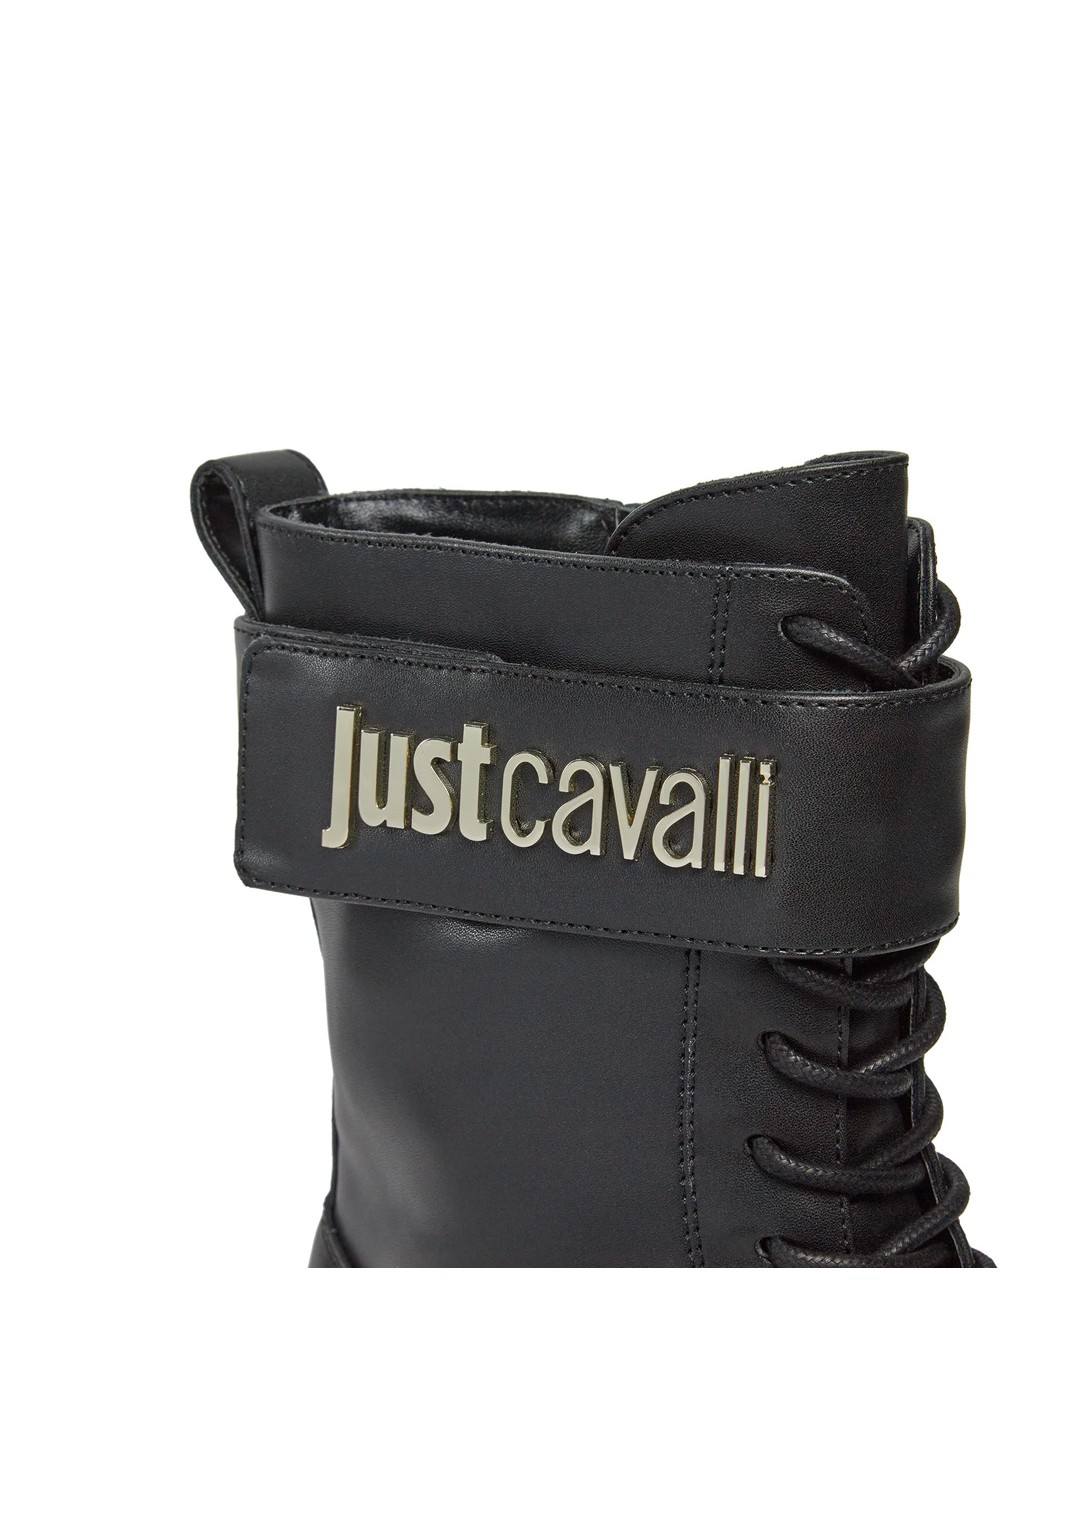 Just Cavalli - Anfibio logo - Donna - 75RA3880 899